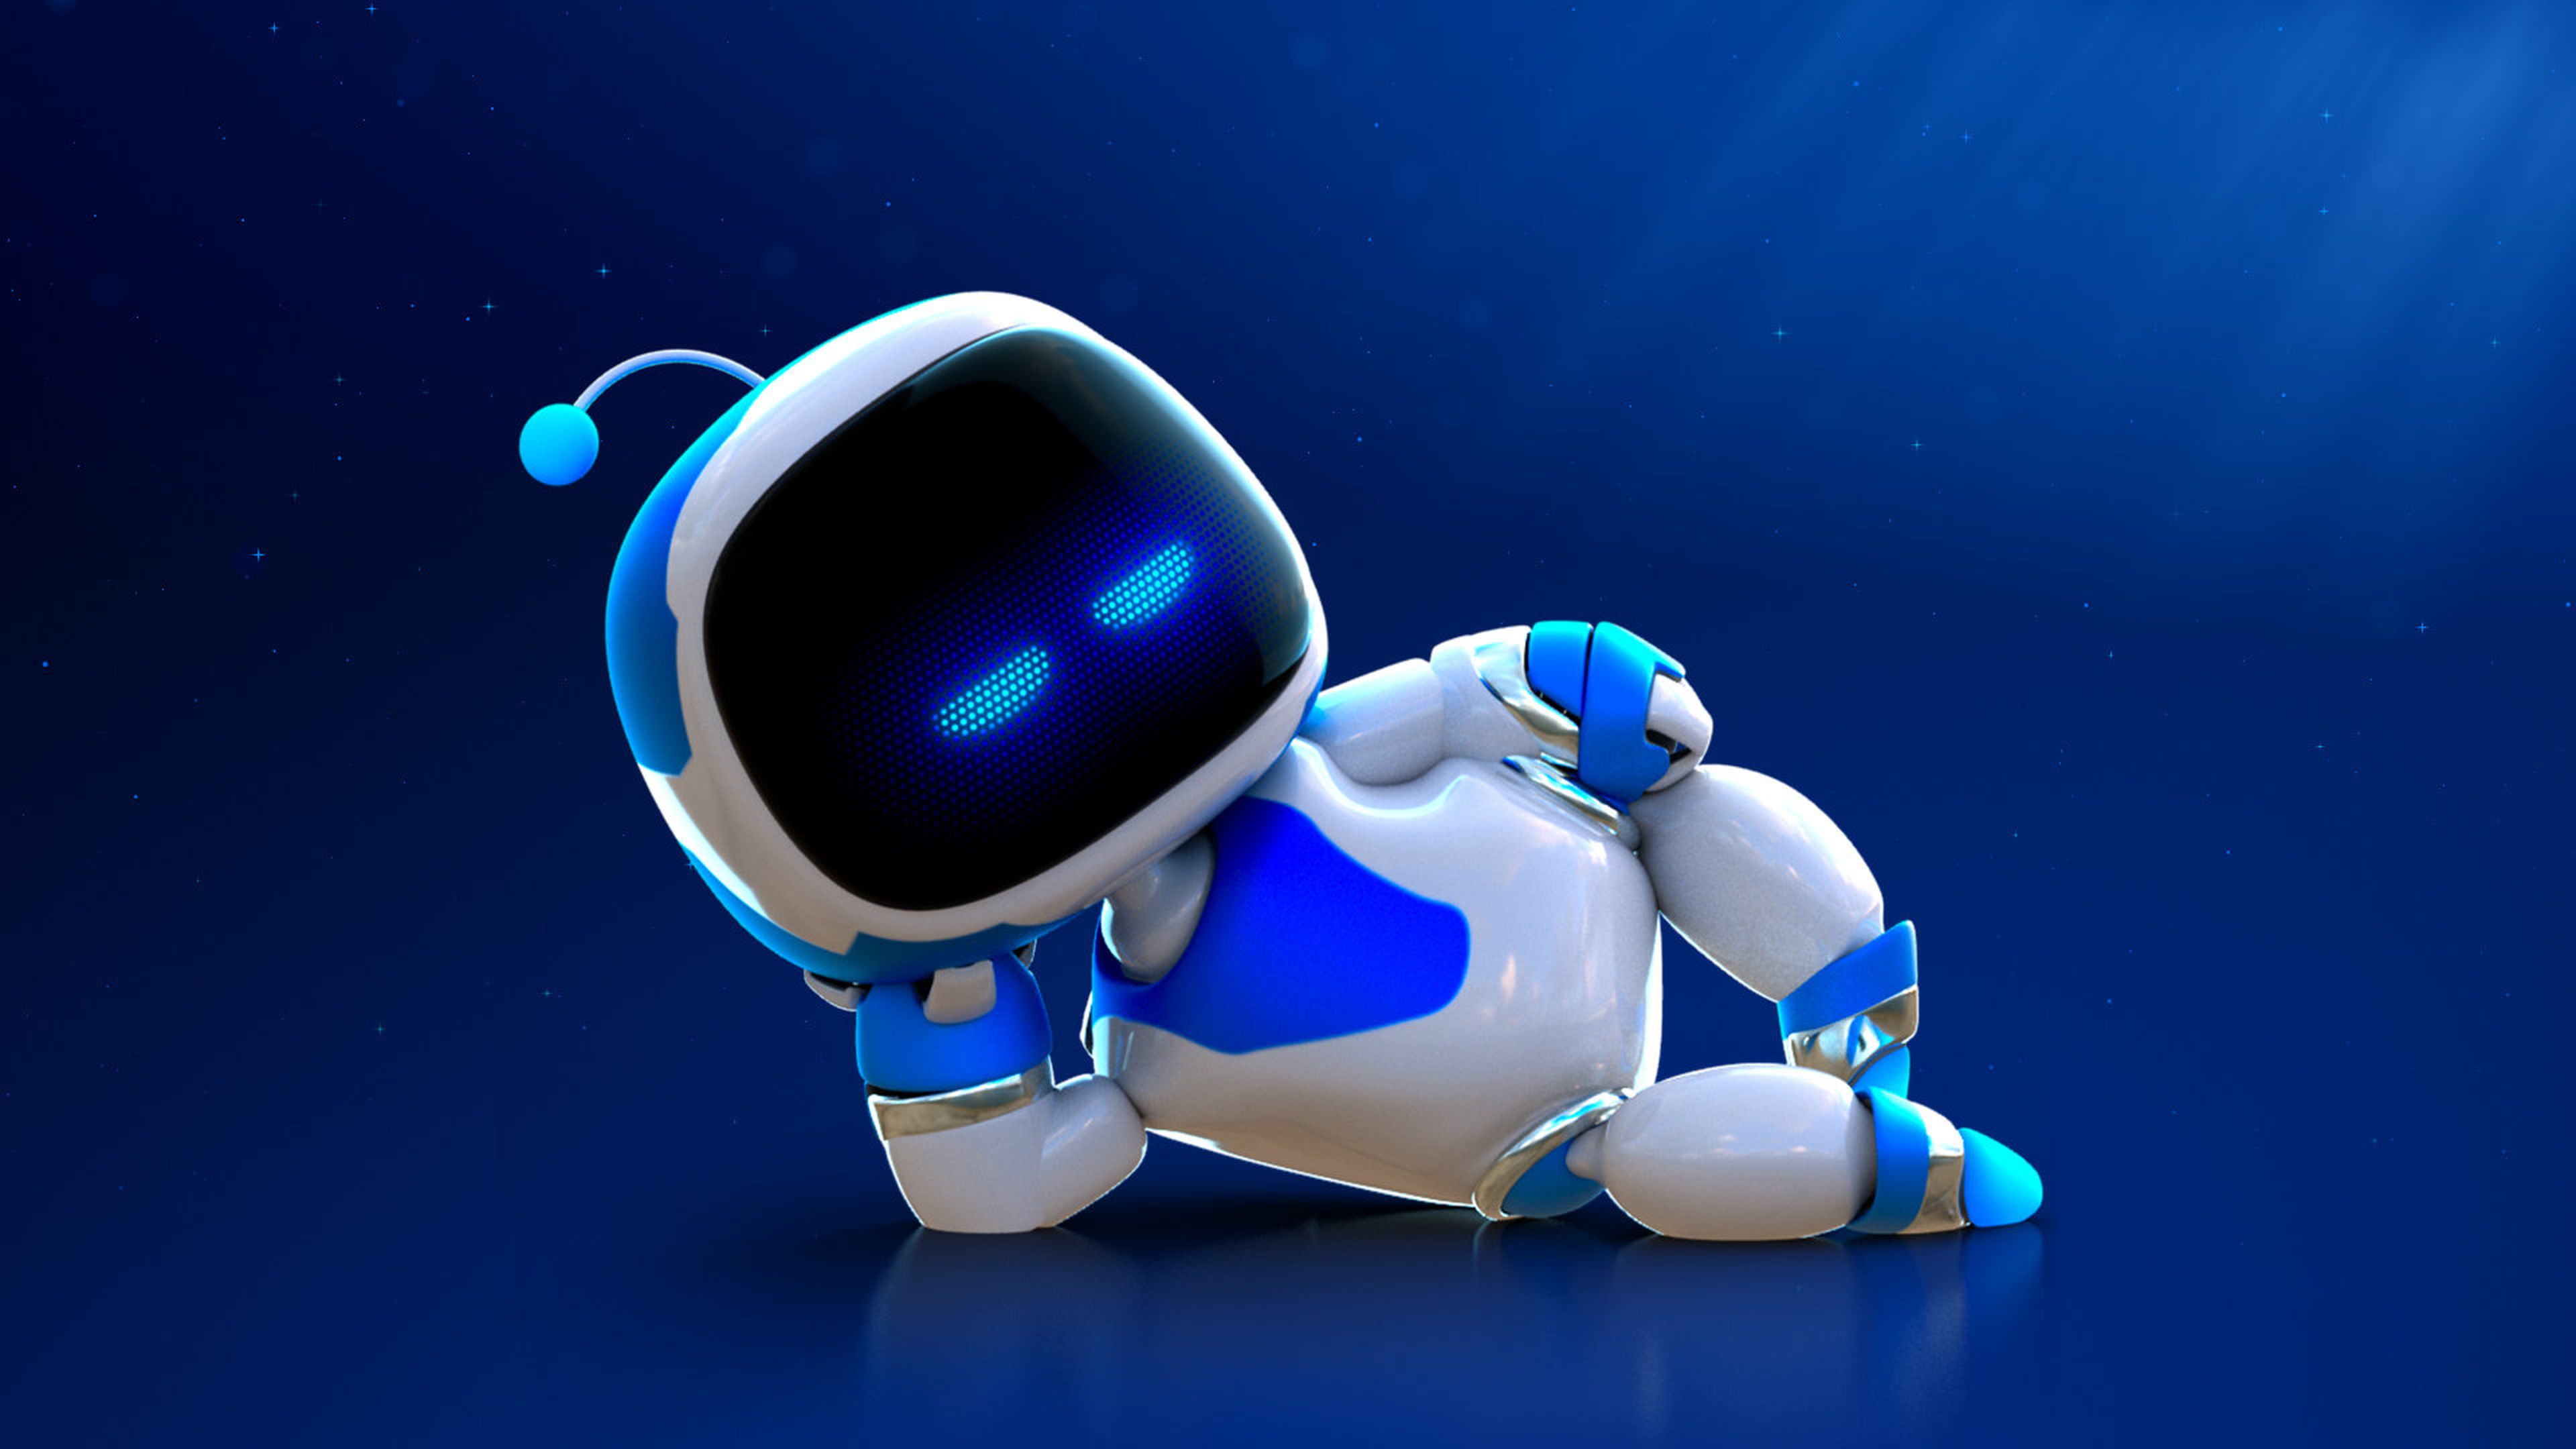 Astro robot PS5